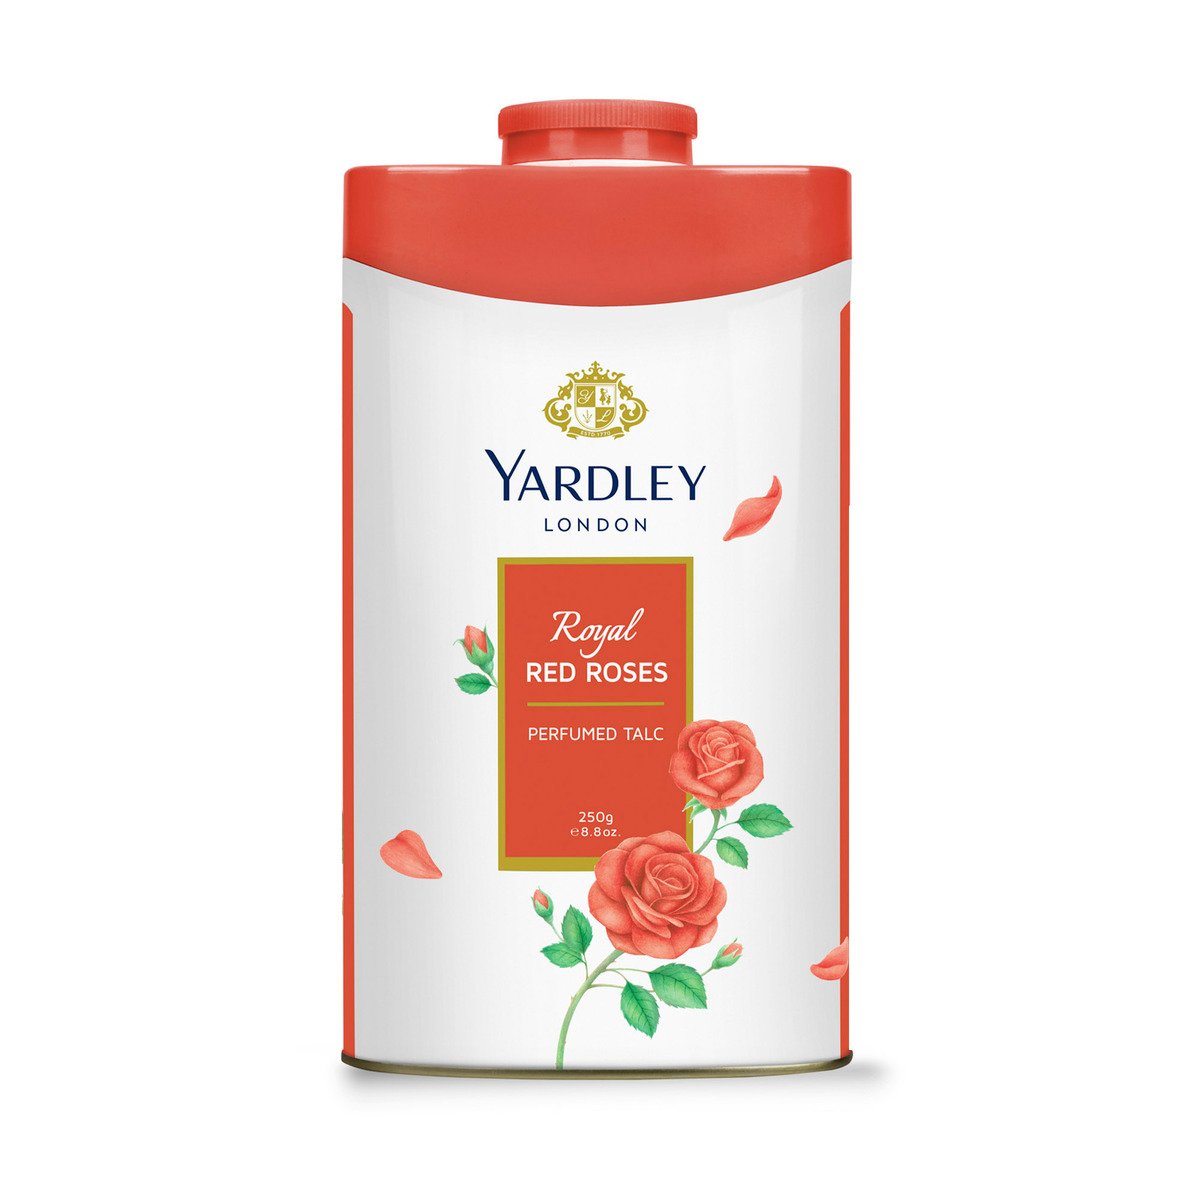 Yardley Red Rose Perfumed Talc 250g